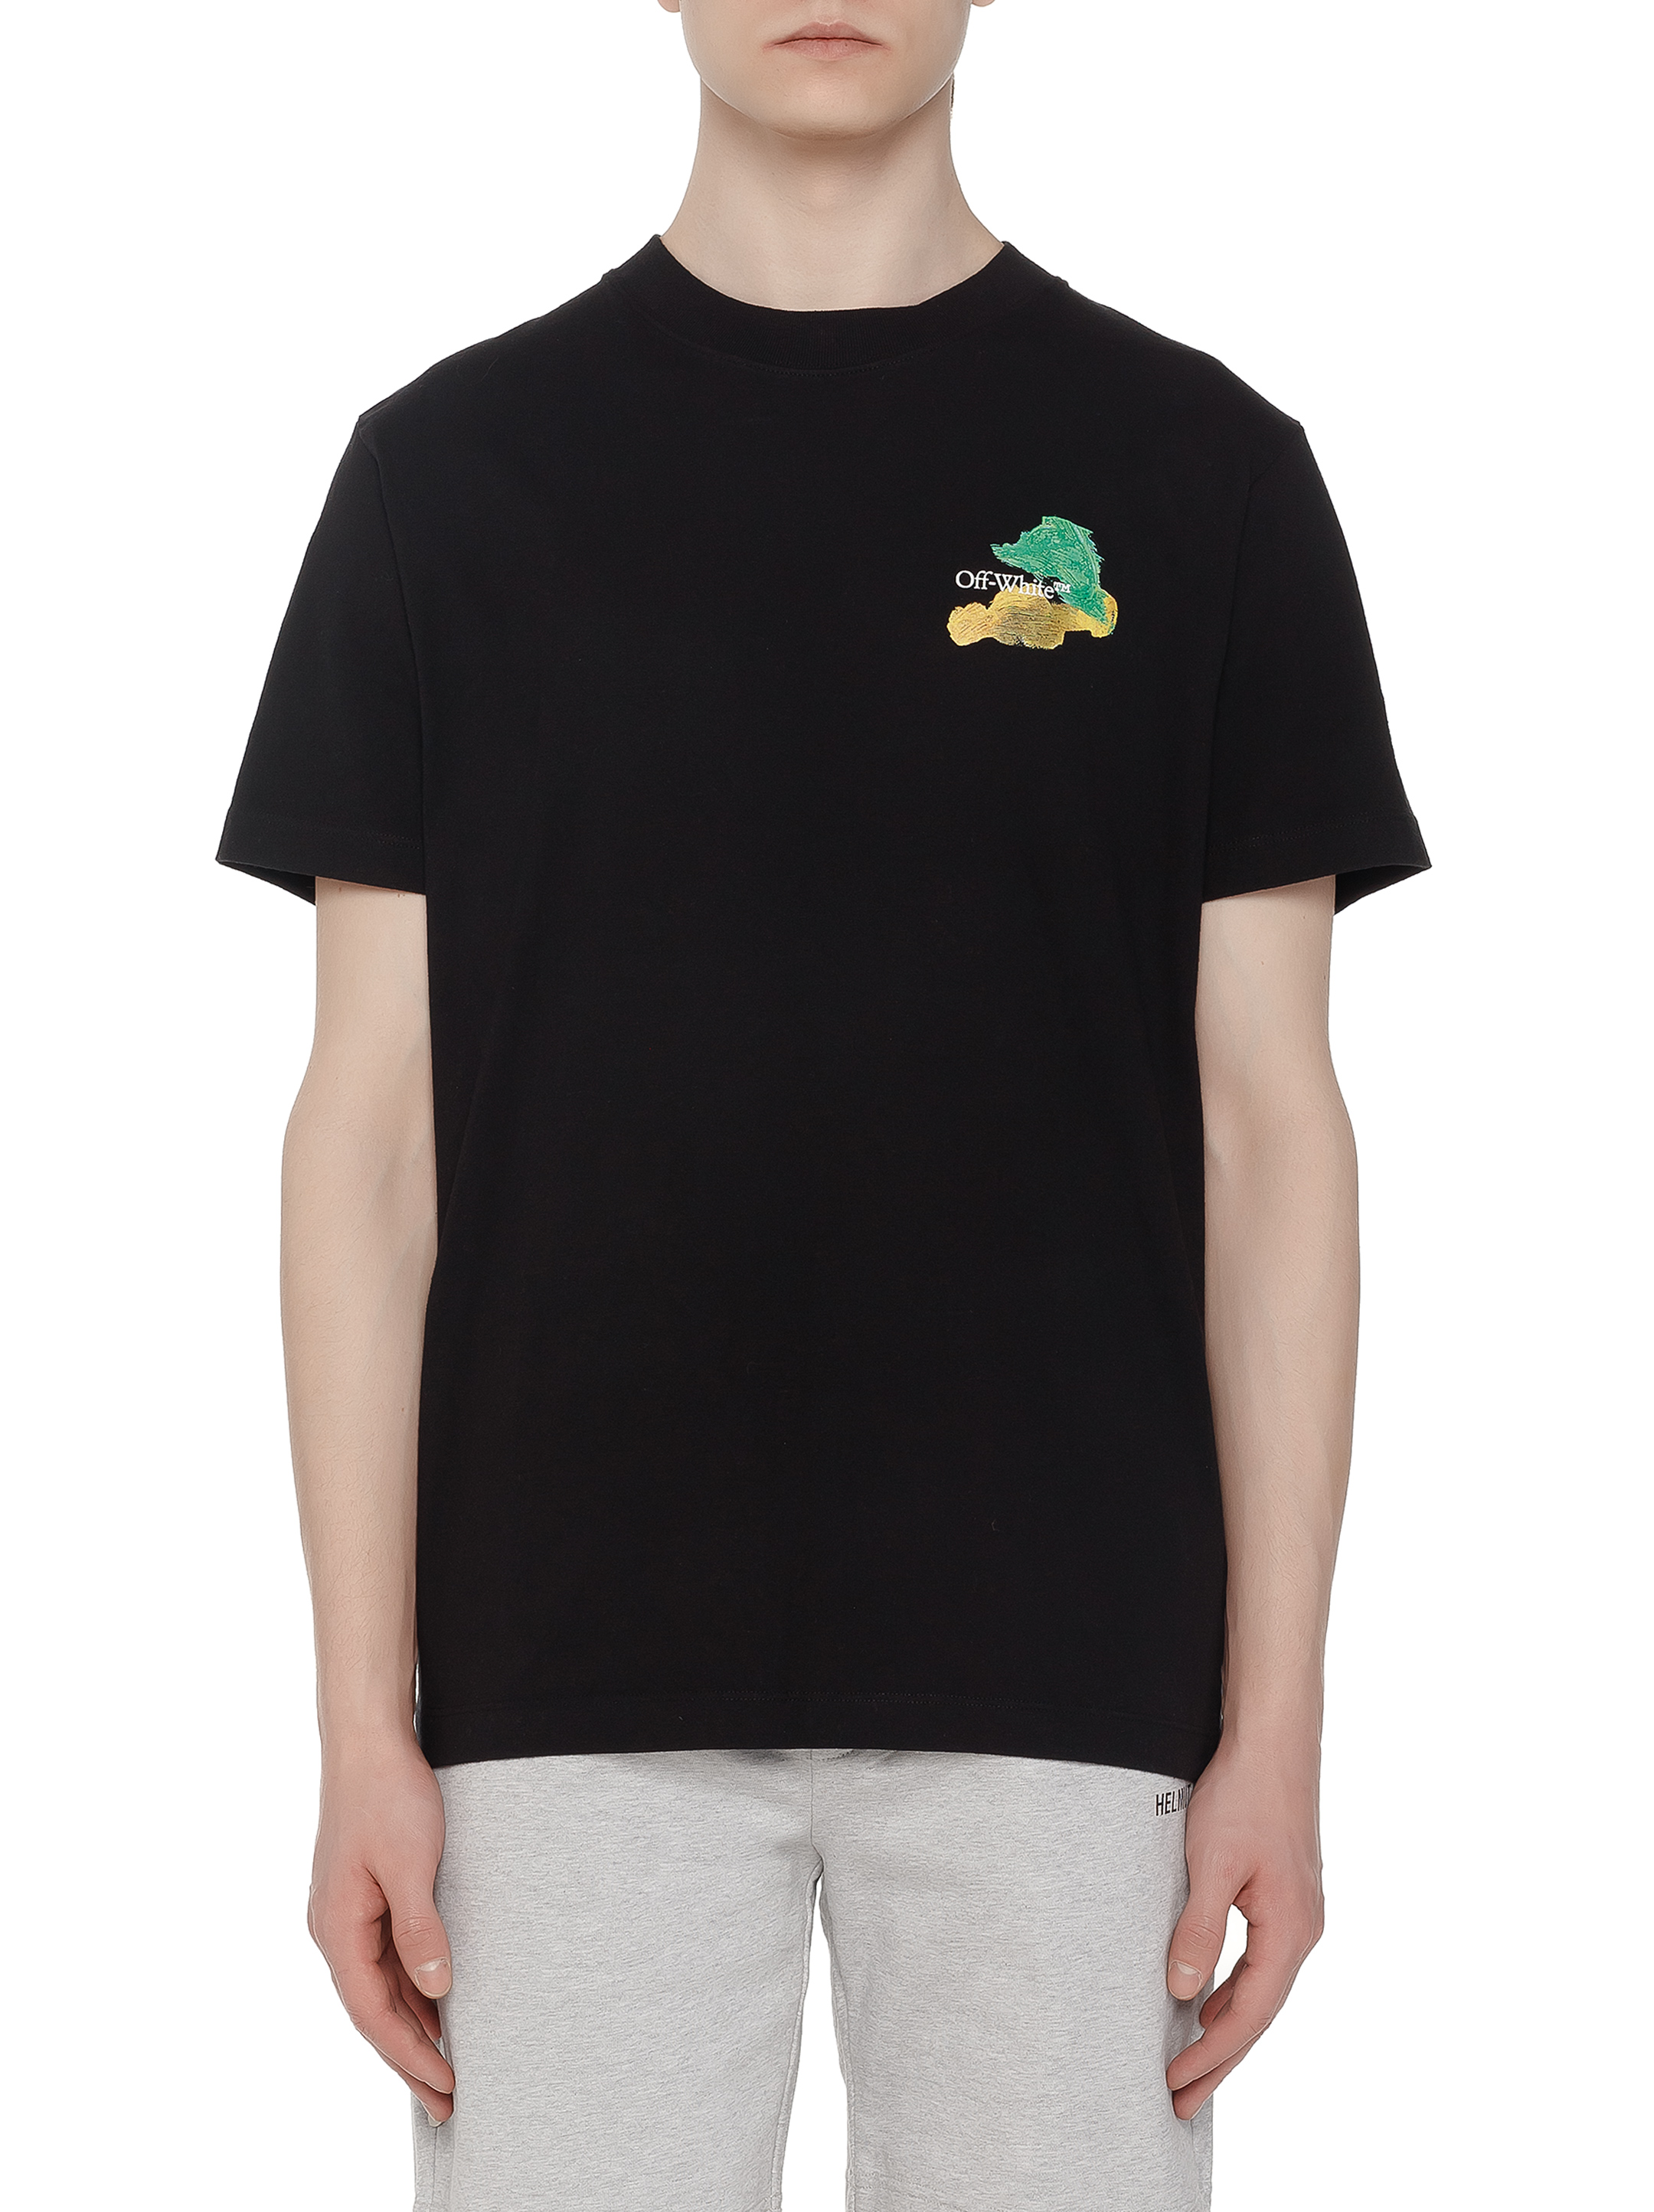 vaultroom HELI RACE TEE - Tシャツ/カットソー(半袖/袖なし)